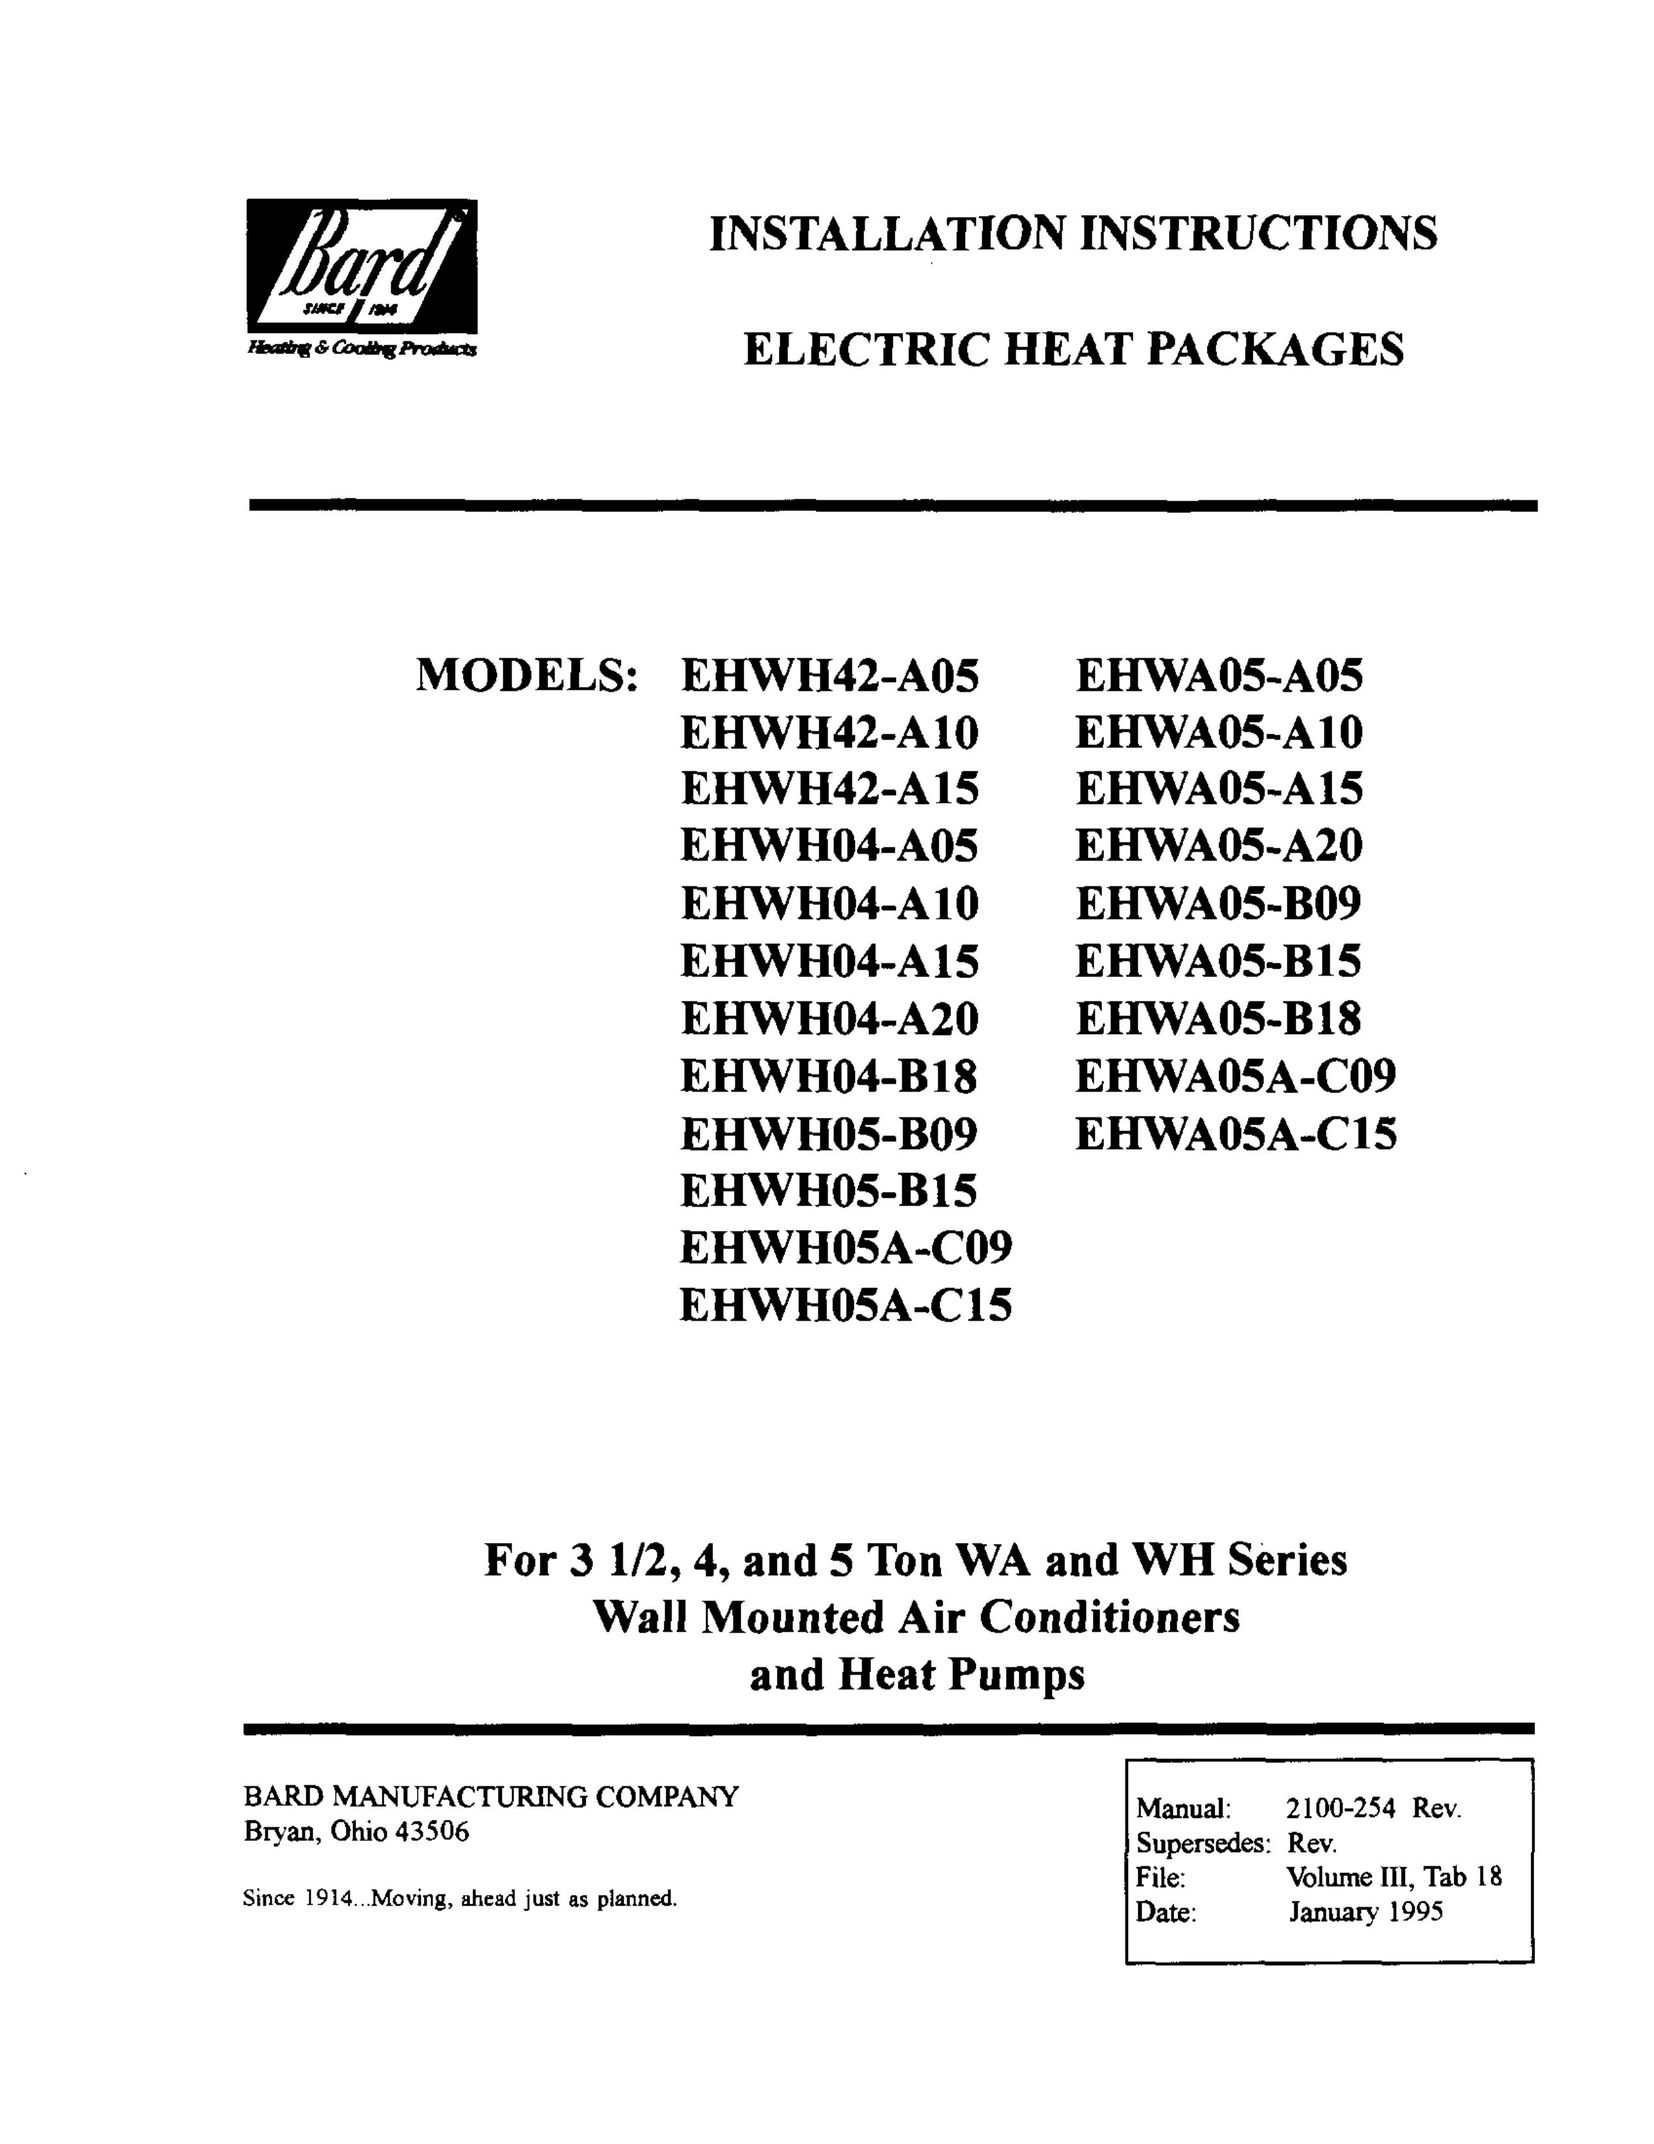 Bard EHWHA05A-C15 Heat Gun User Manual